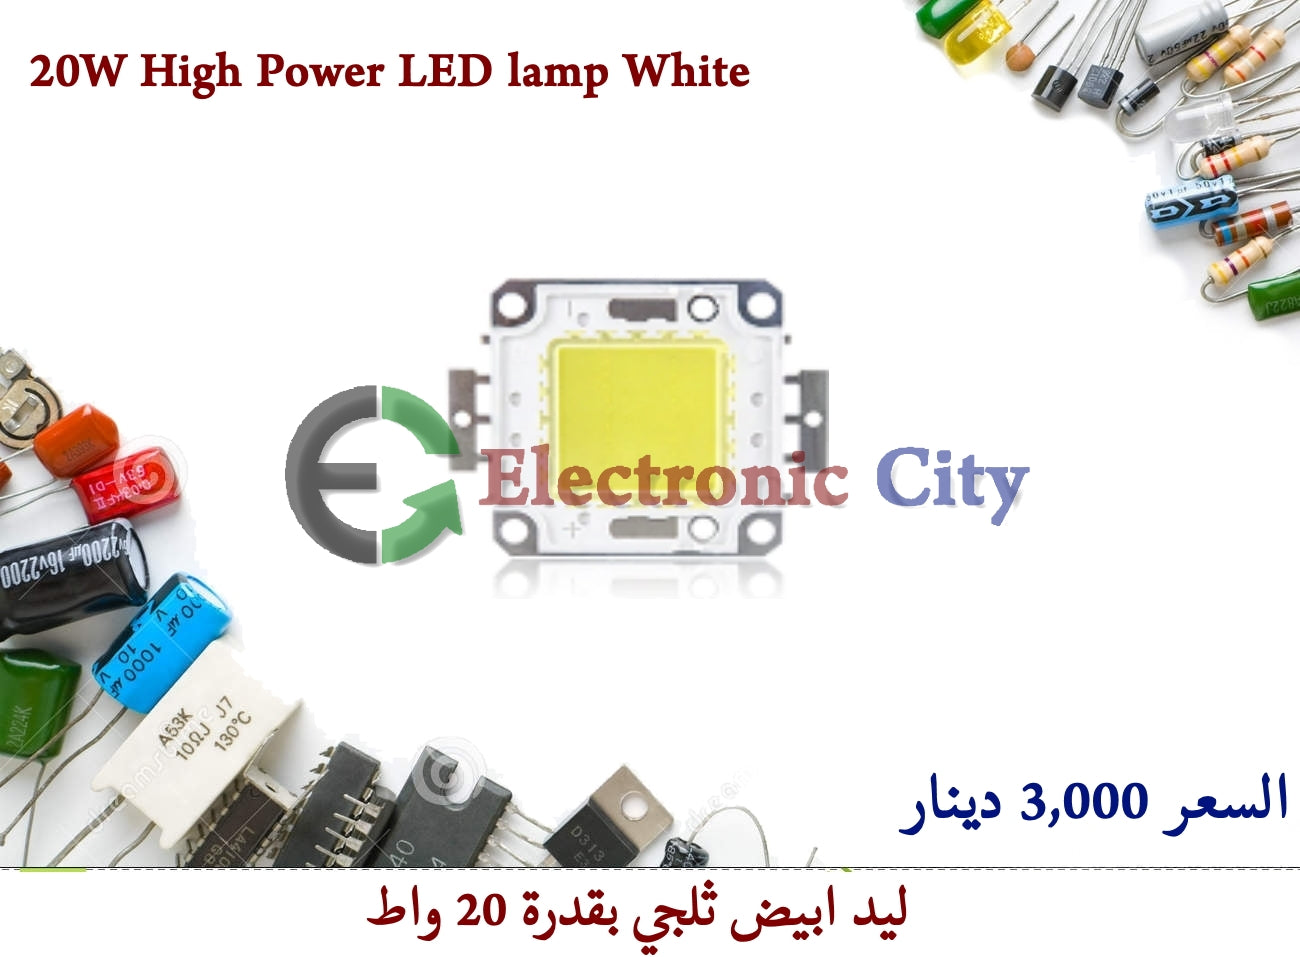 20W High Power LED lamp White